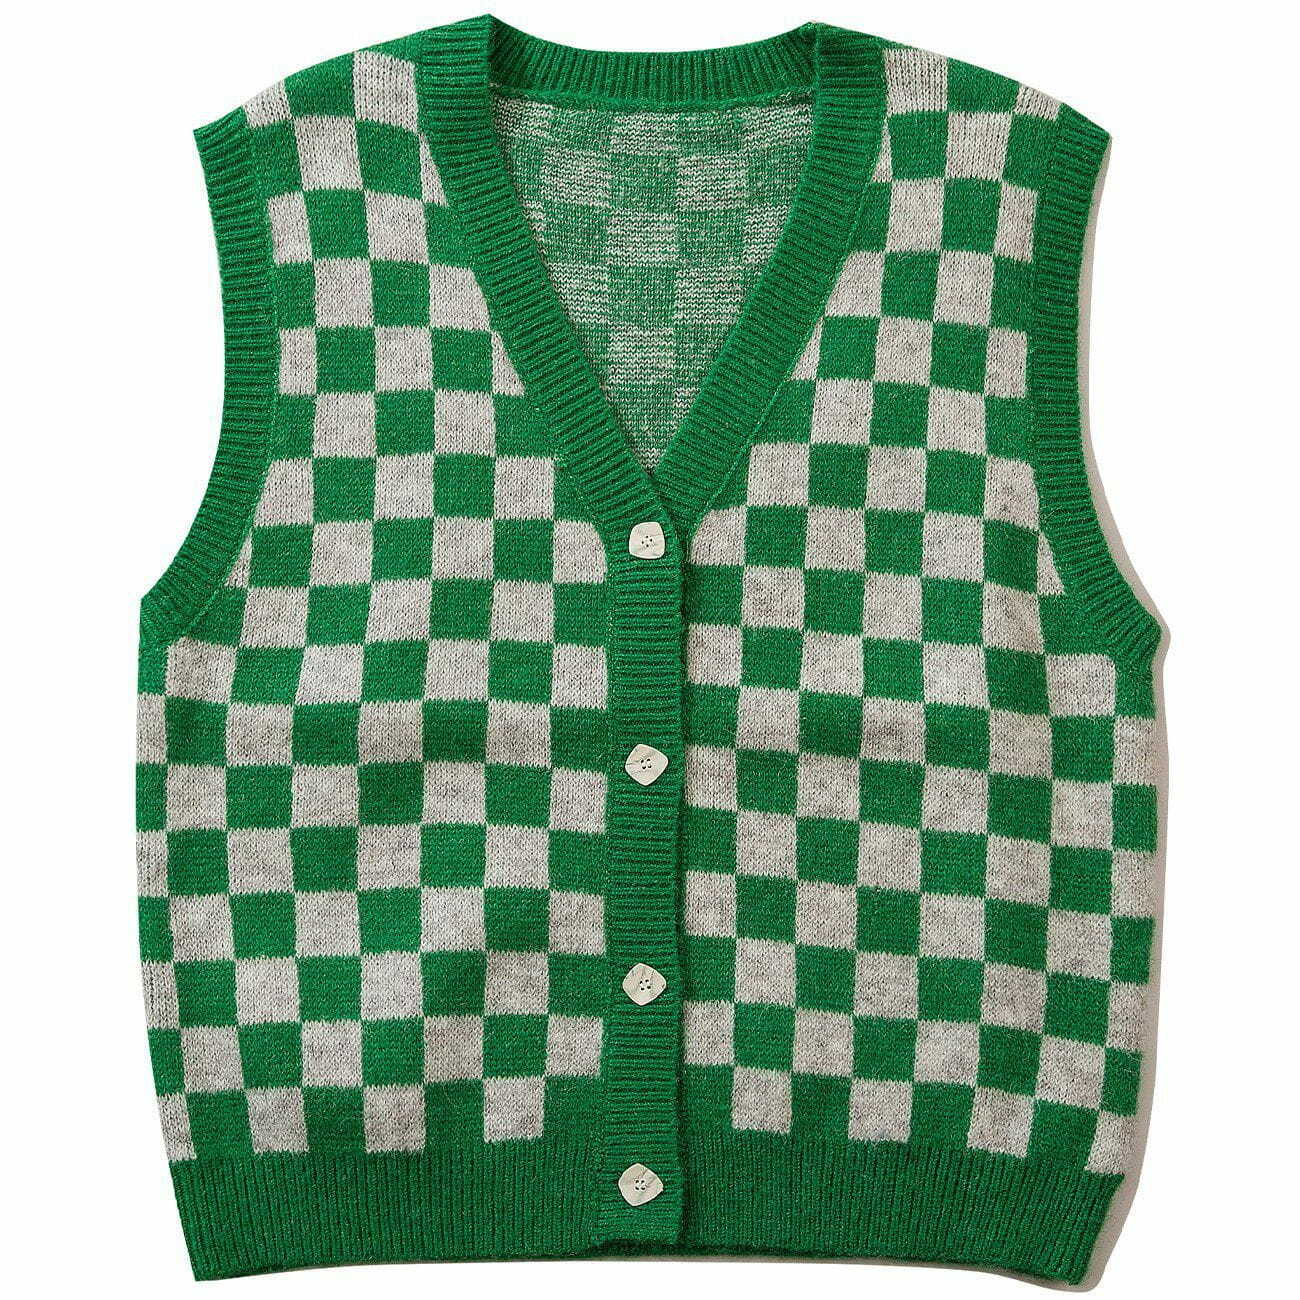 checkerboard knit sweater vest edgy streetwear essential 4409